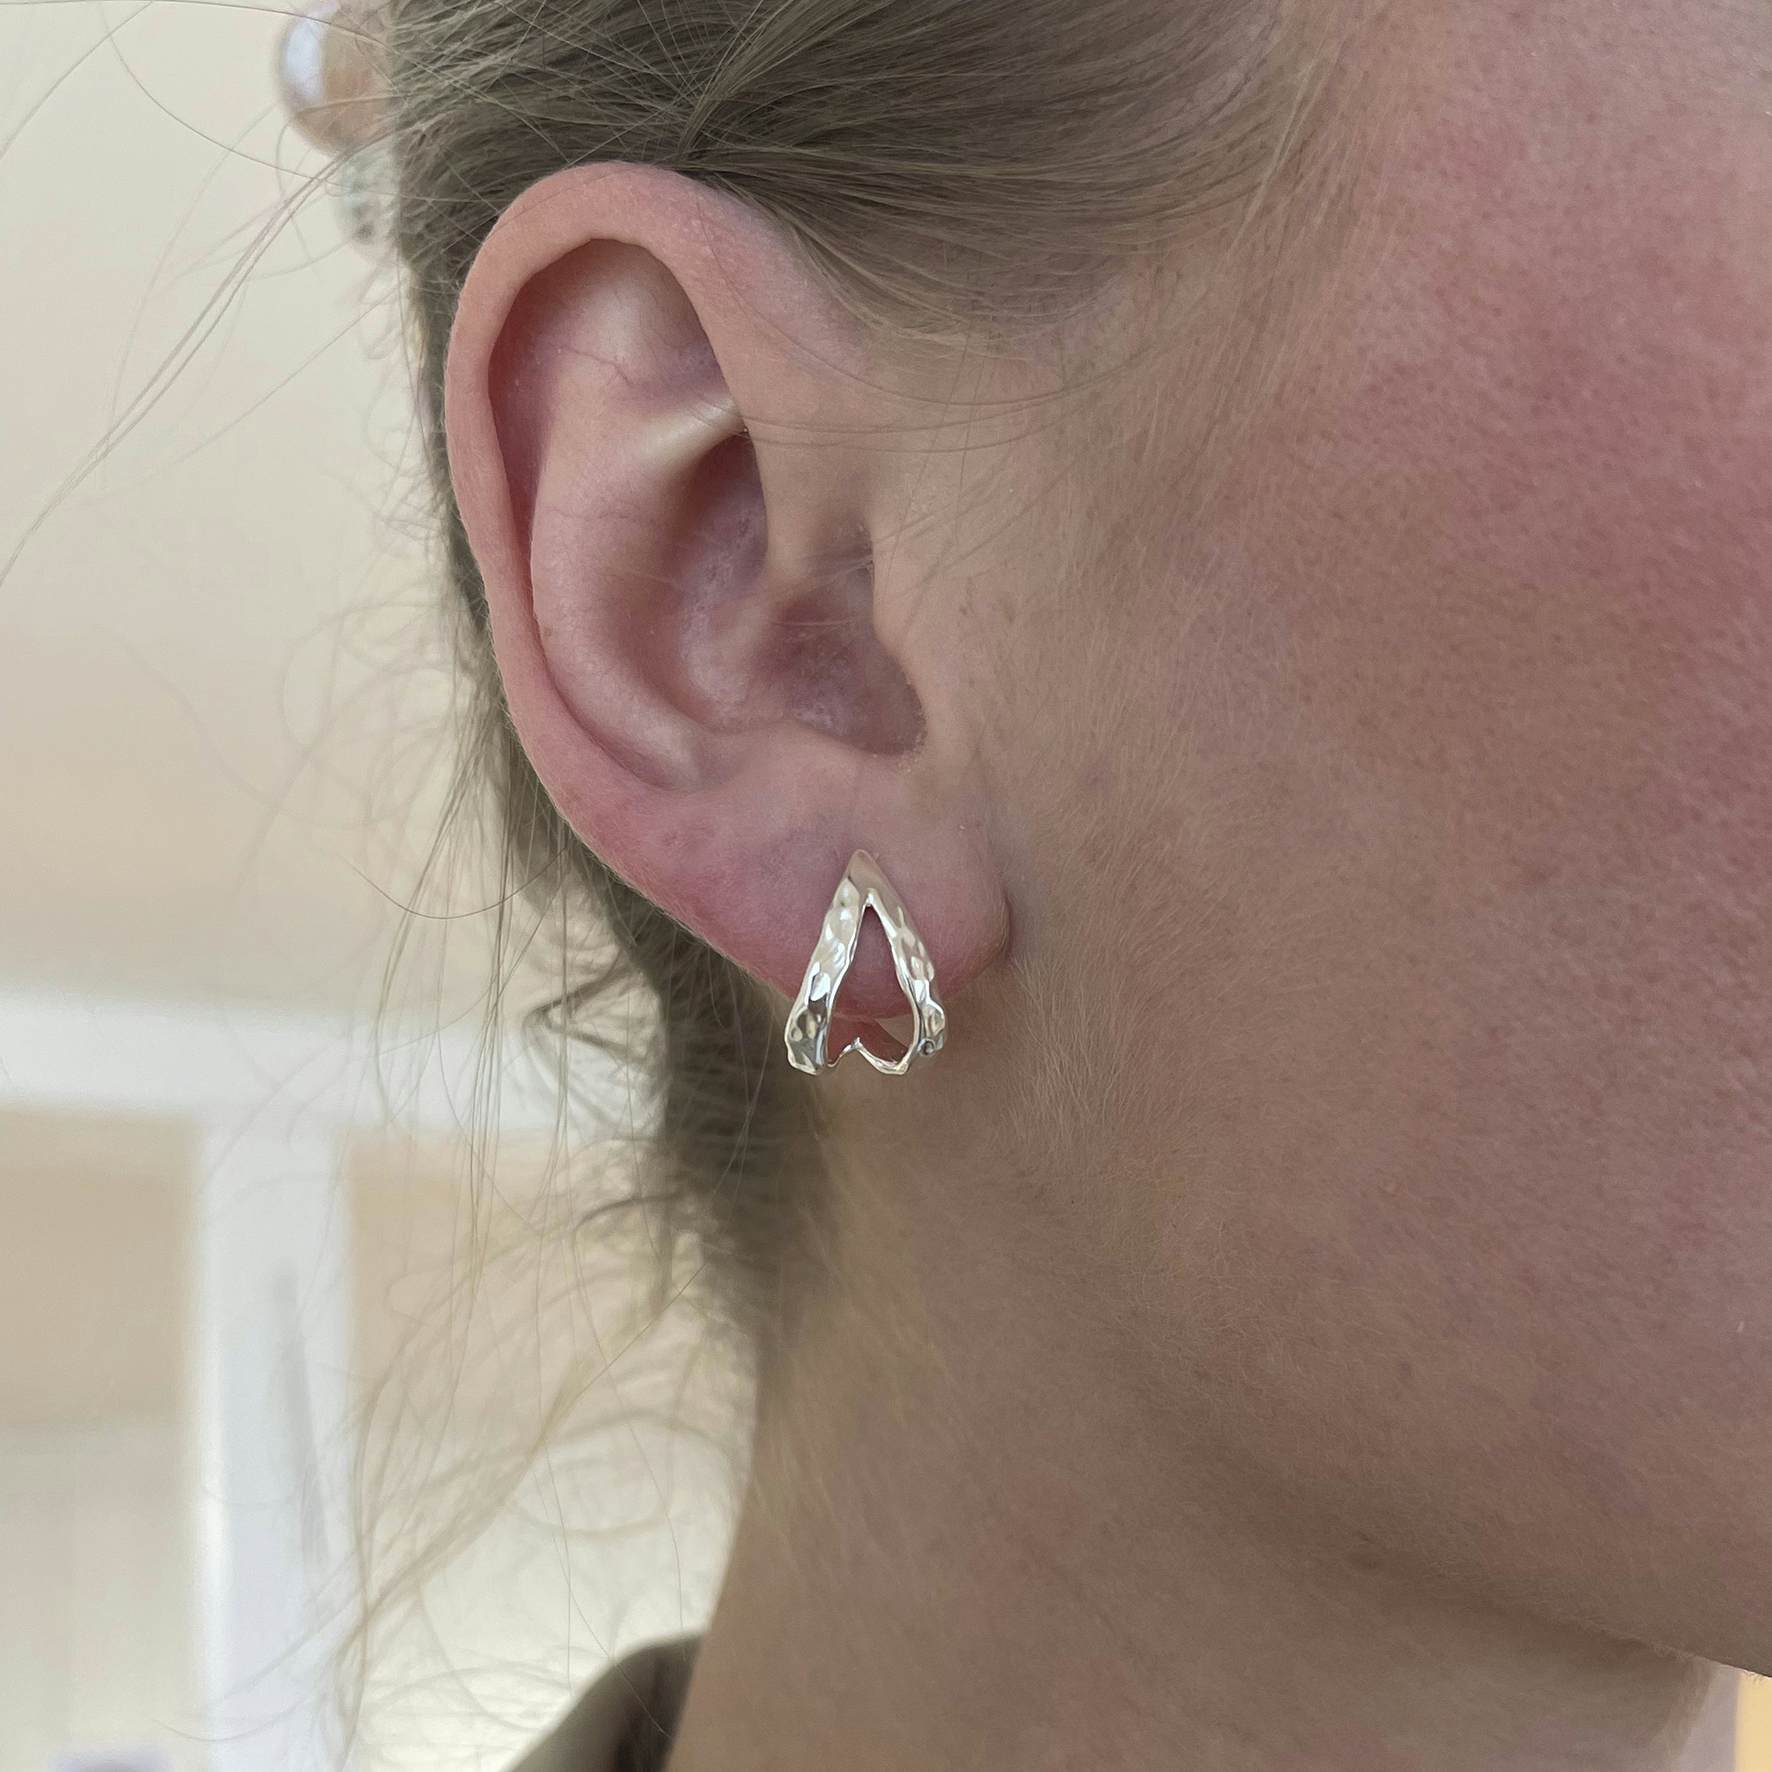 Breakup Earring von Jane Kønig in Vergoldet-Silber Sterling 925